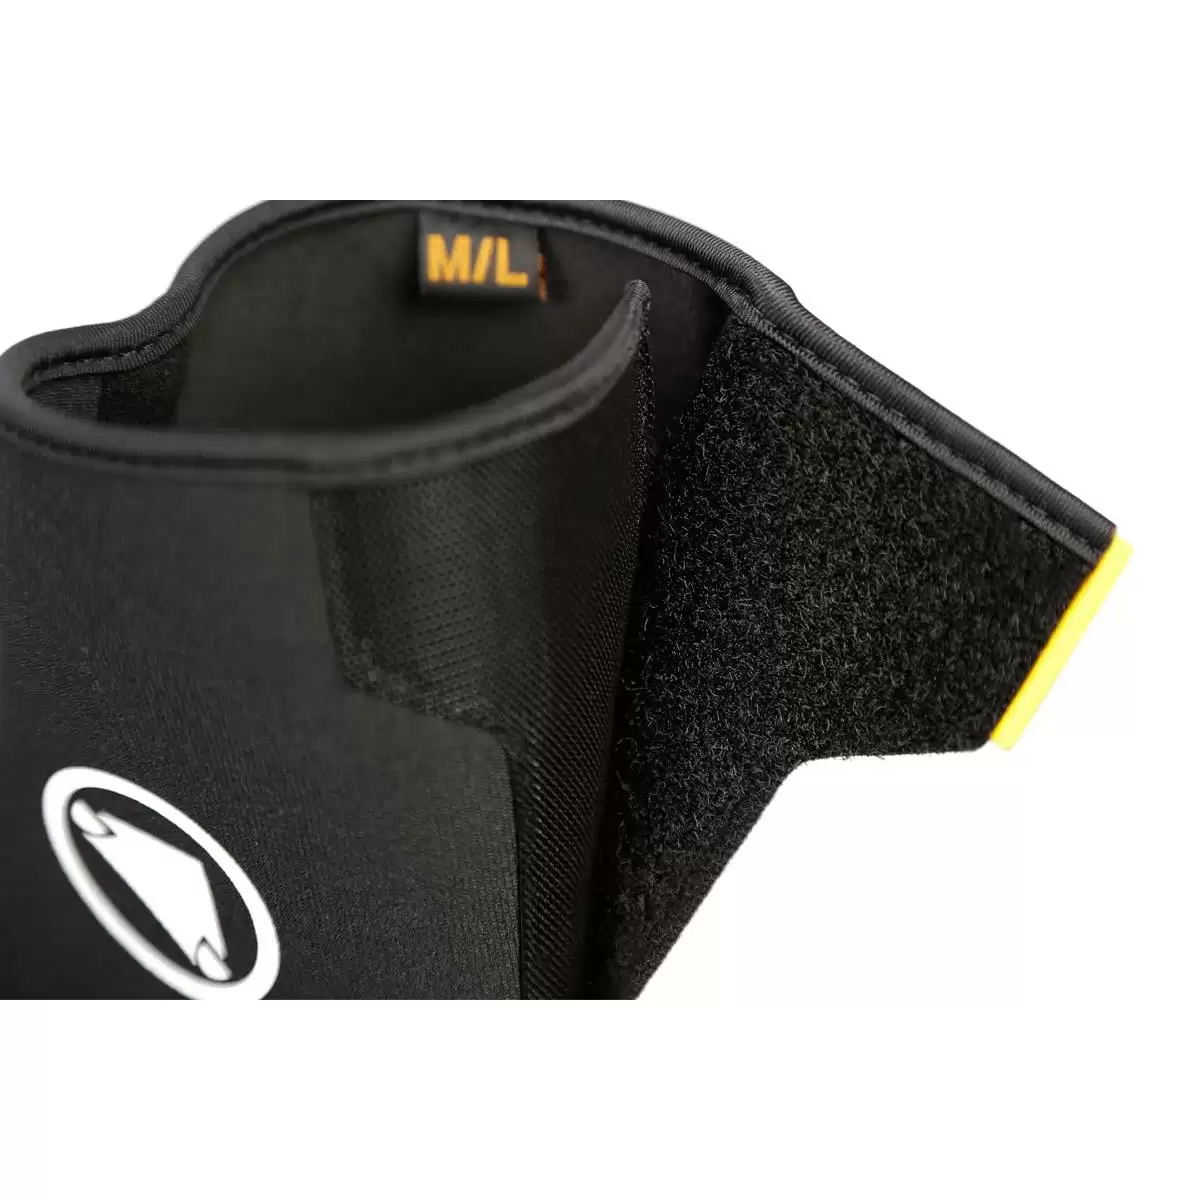 MT500 Plus Overshoe black waterproof size L/XL (42-43) #1